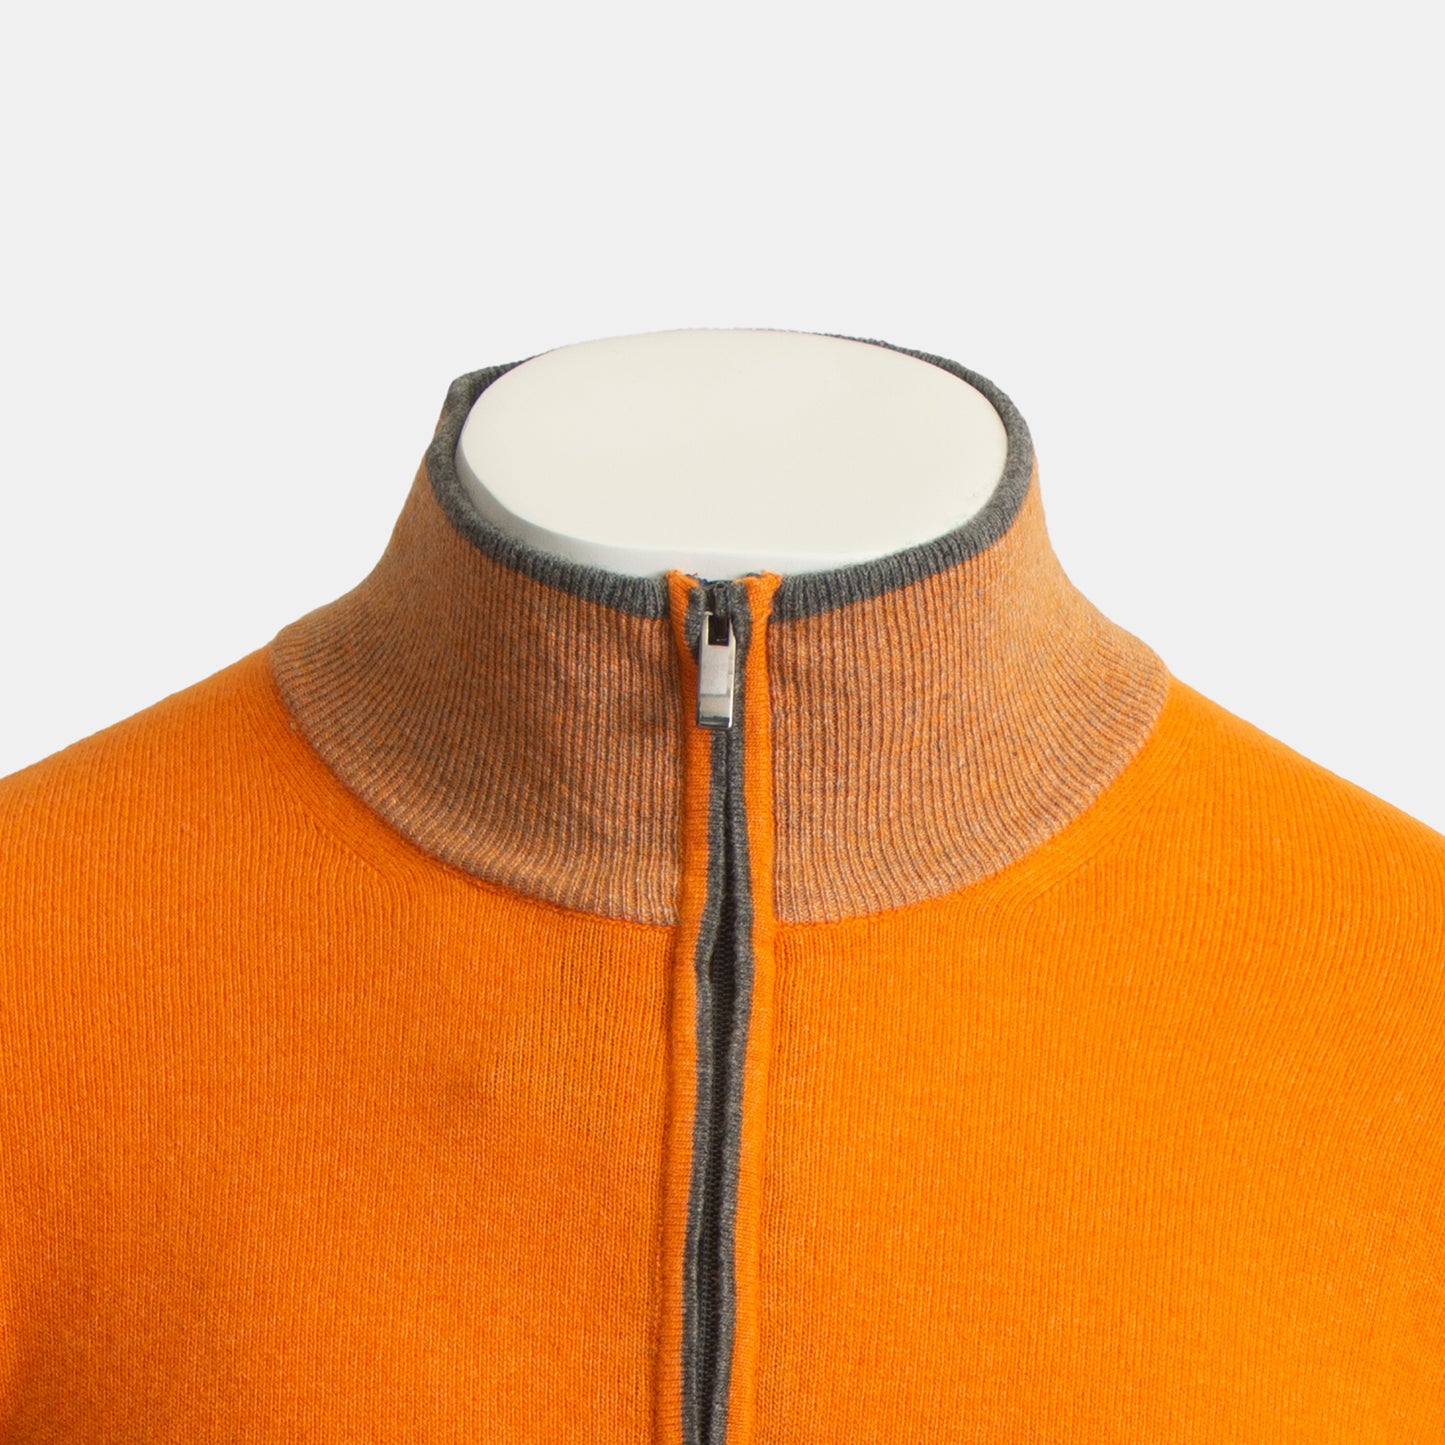 Khaki’s of Carmel - Orange Sweater Crewneck